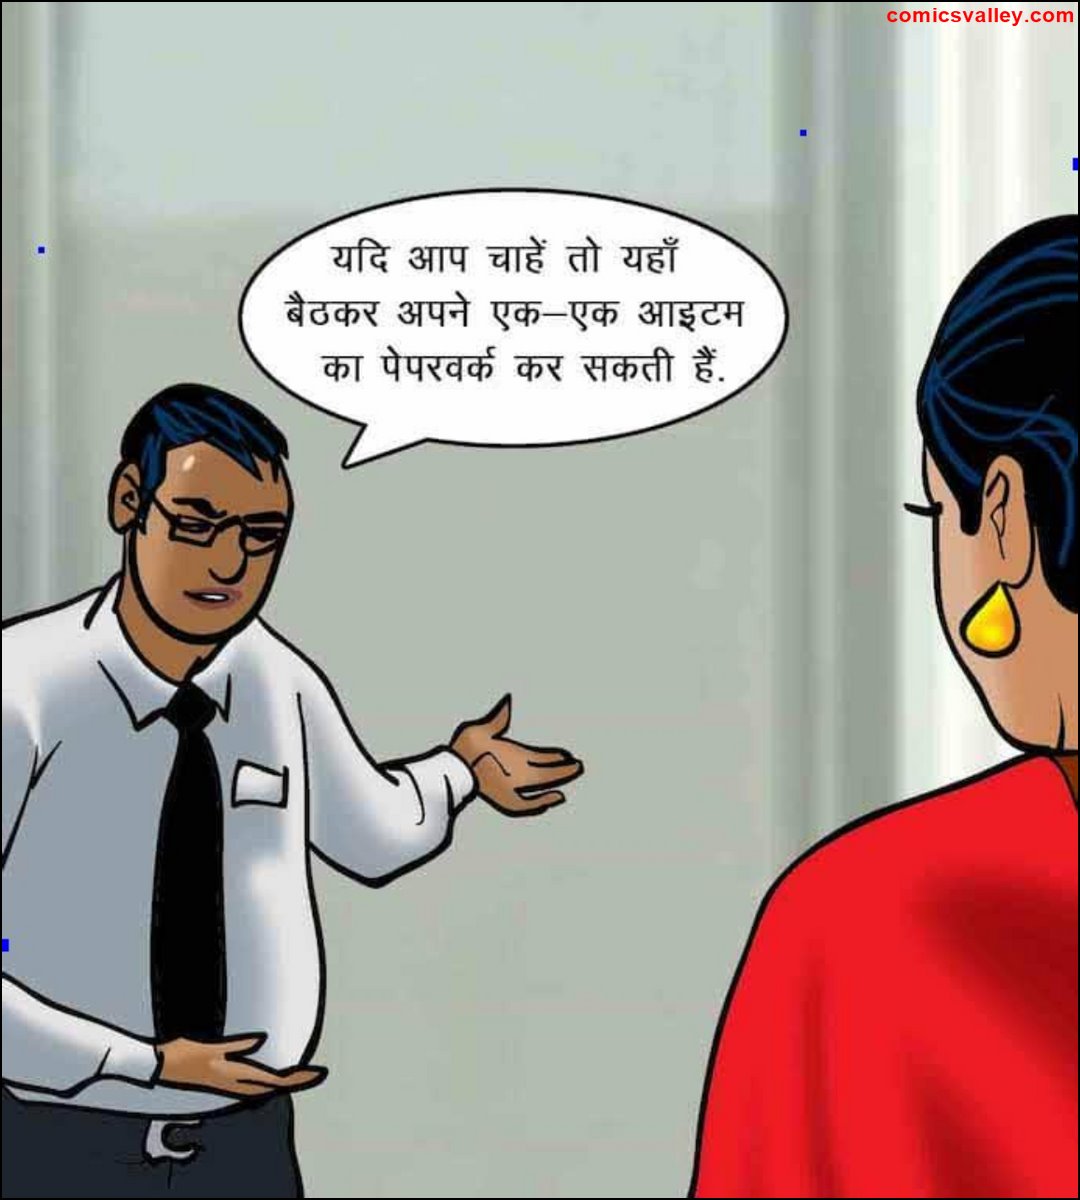 velamma bhabhi hindi sexstory online read